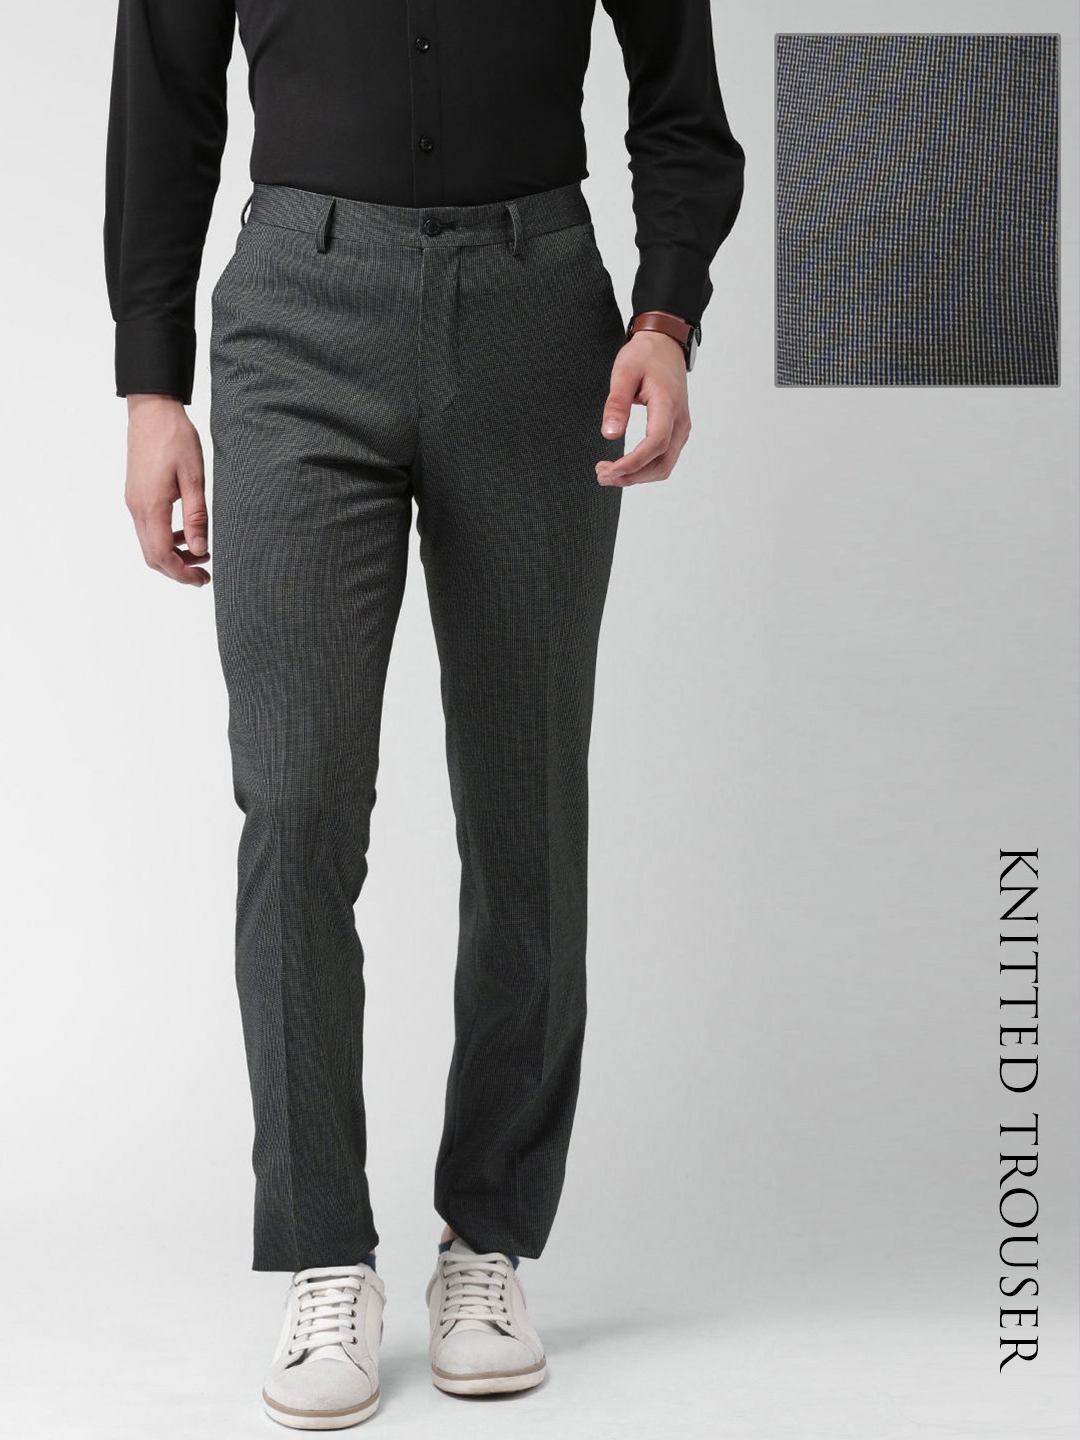 4th  Reckless   Liria Knit Trouser    in Grey     FashionPass